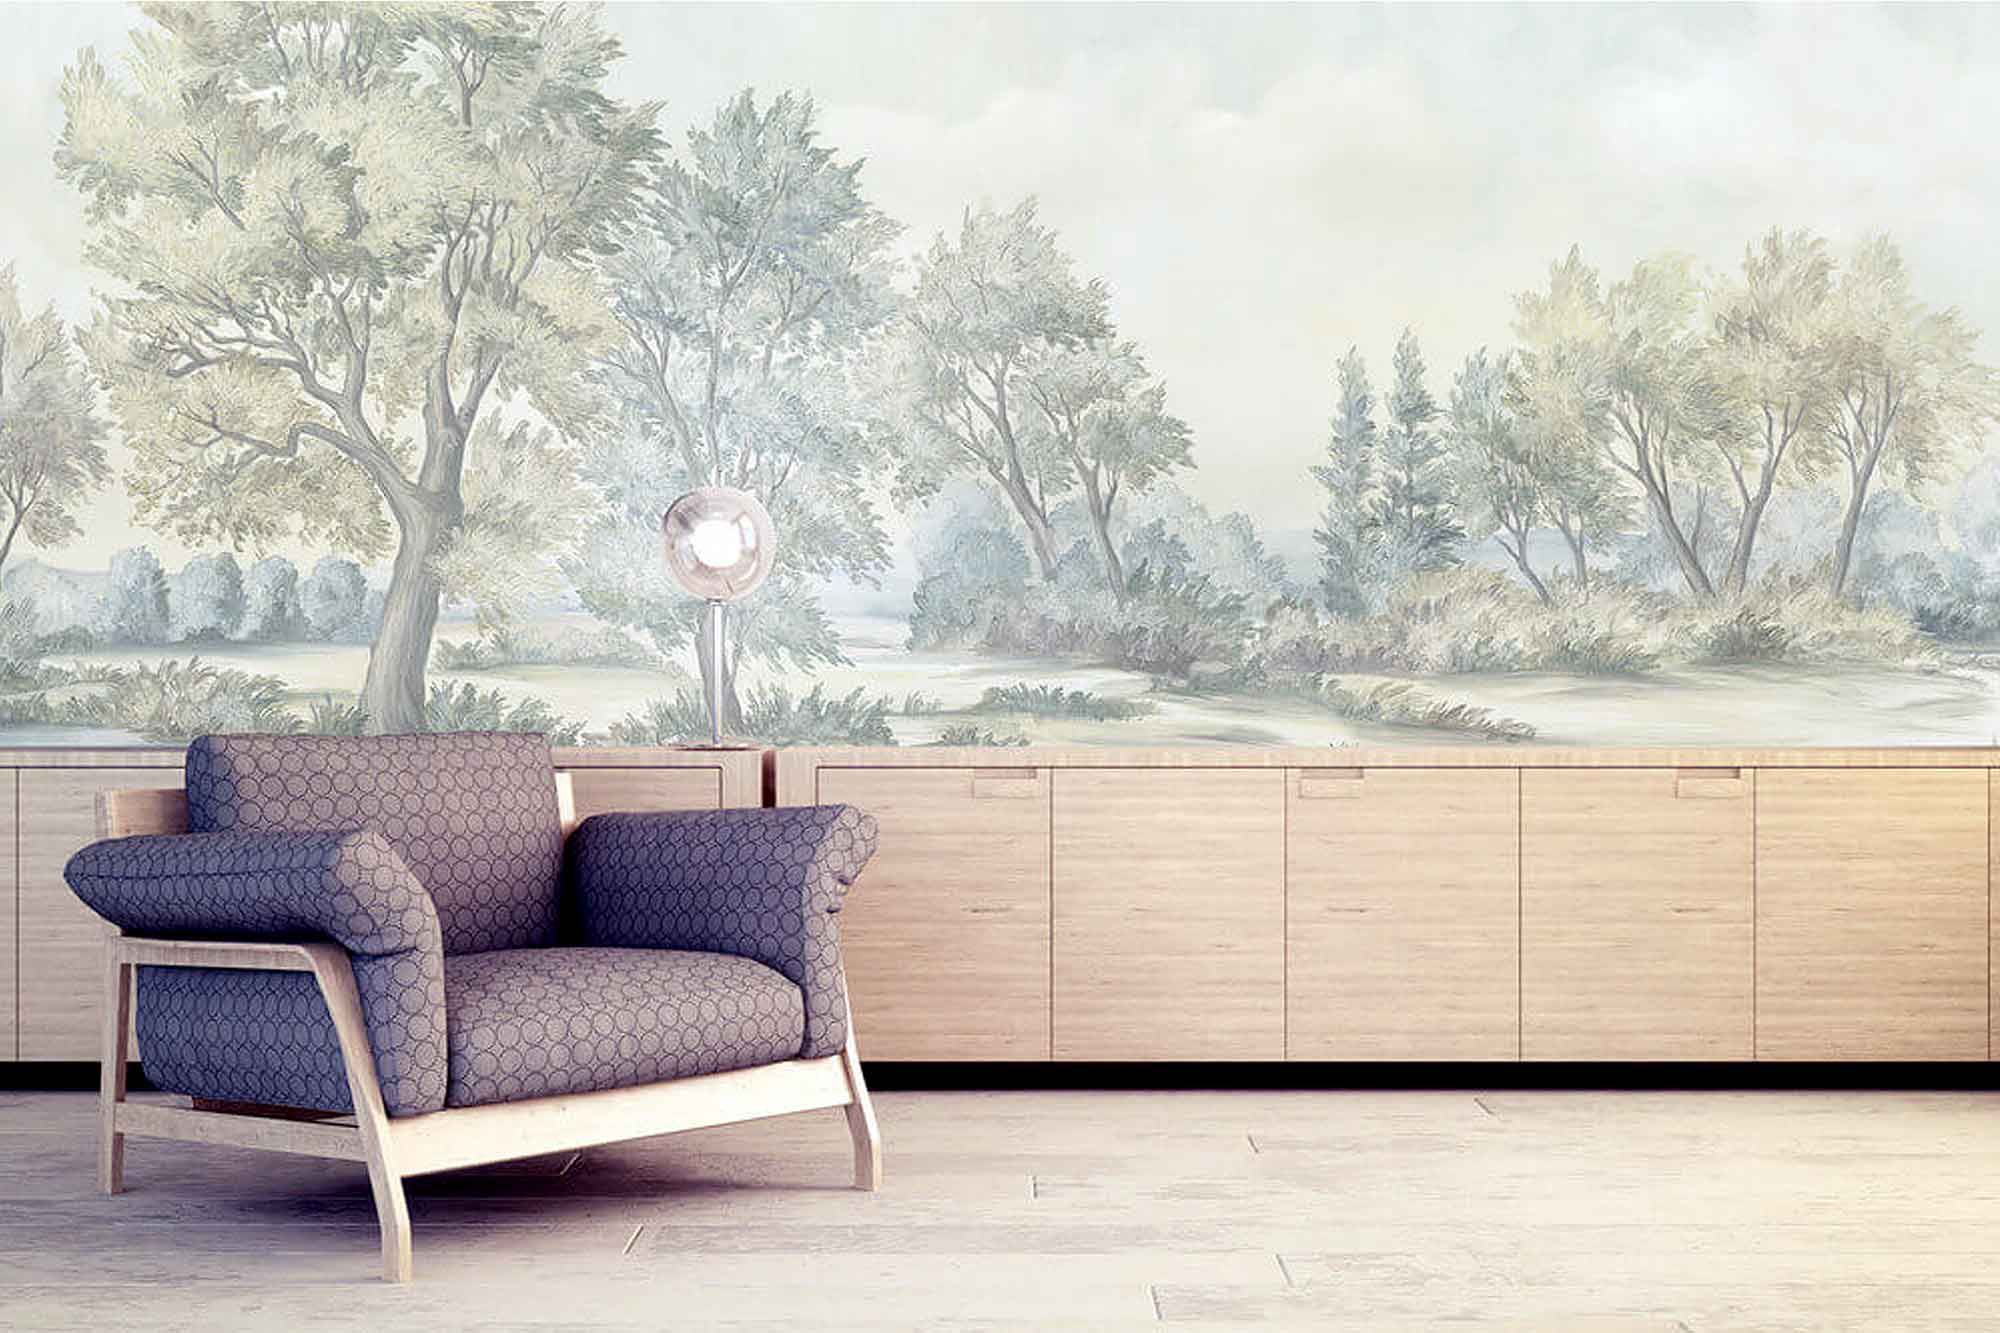 Crane Wall Murals For Home Interior Decor  Ever Wallpaper UK